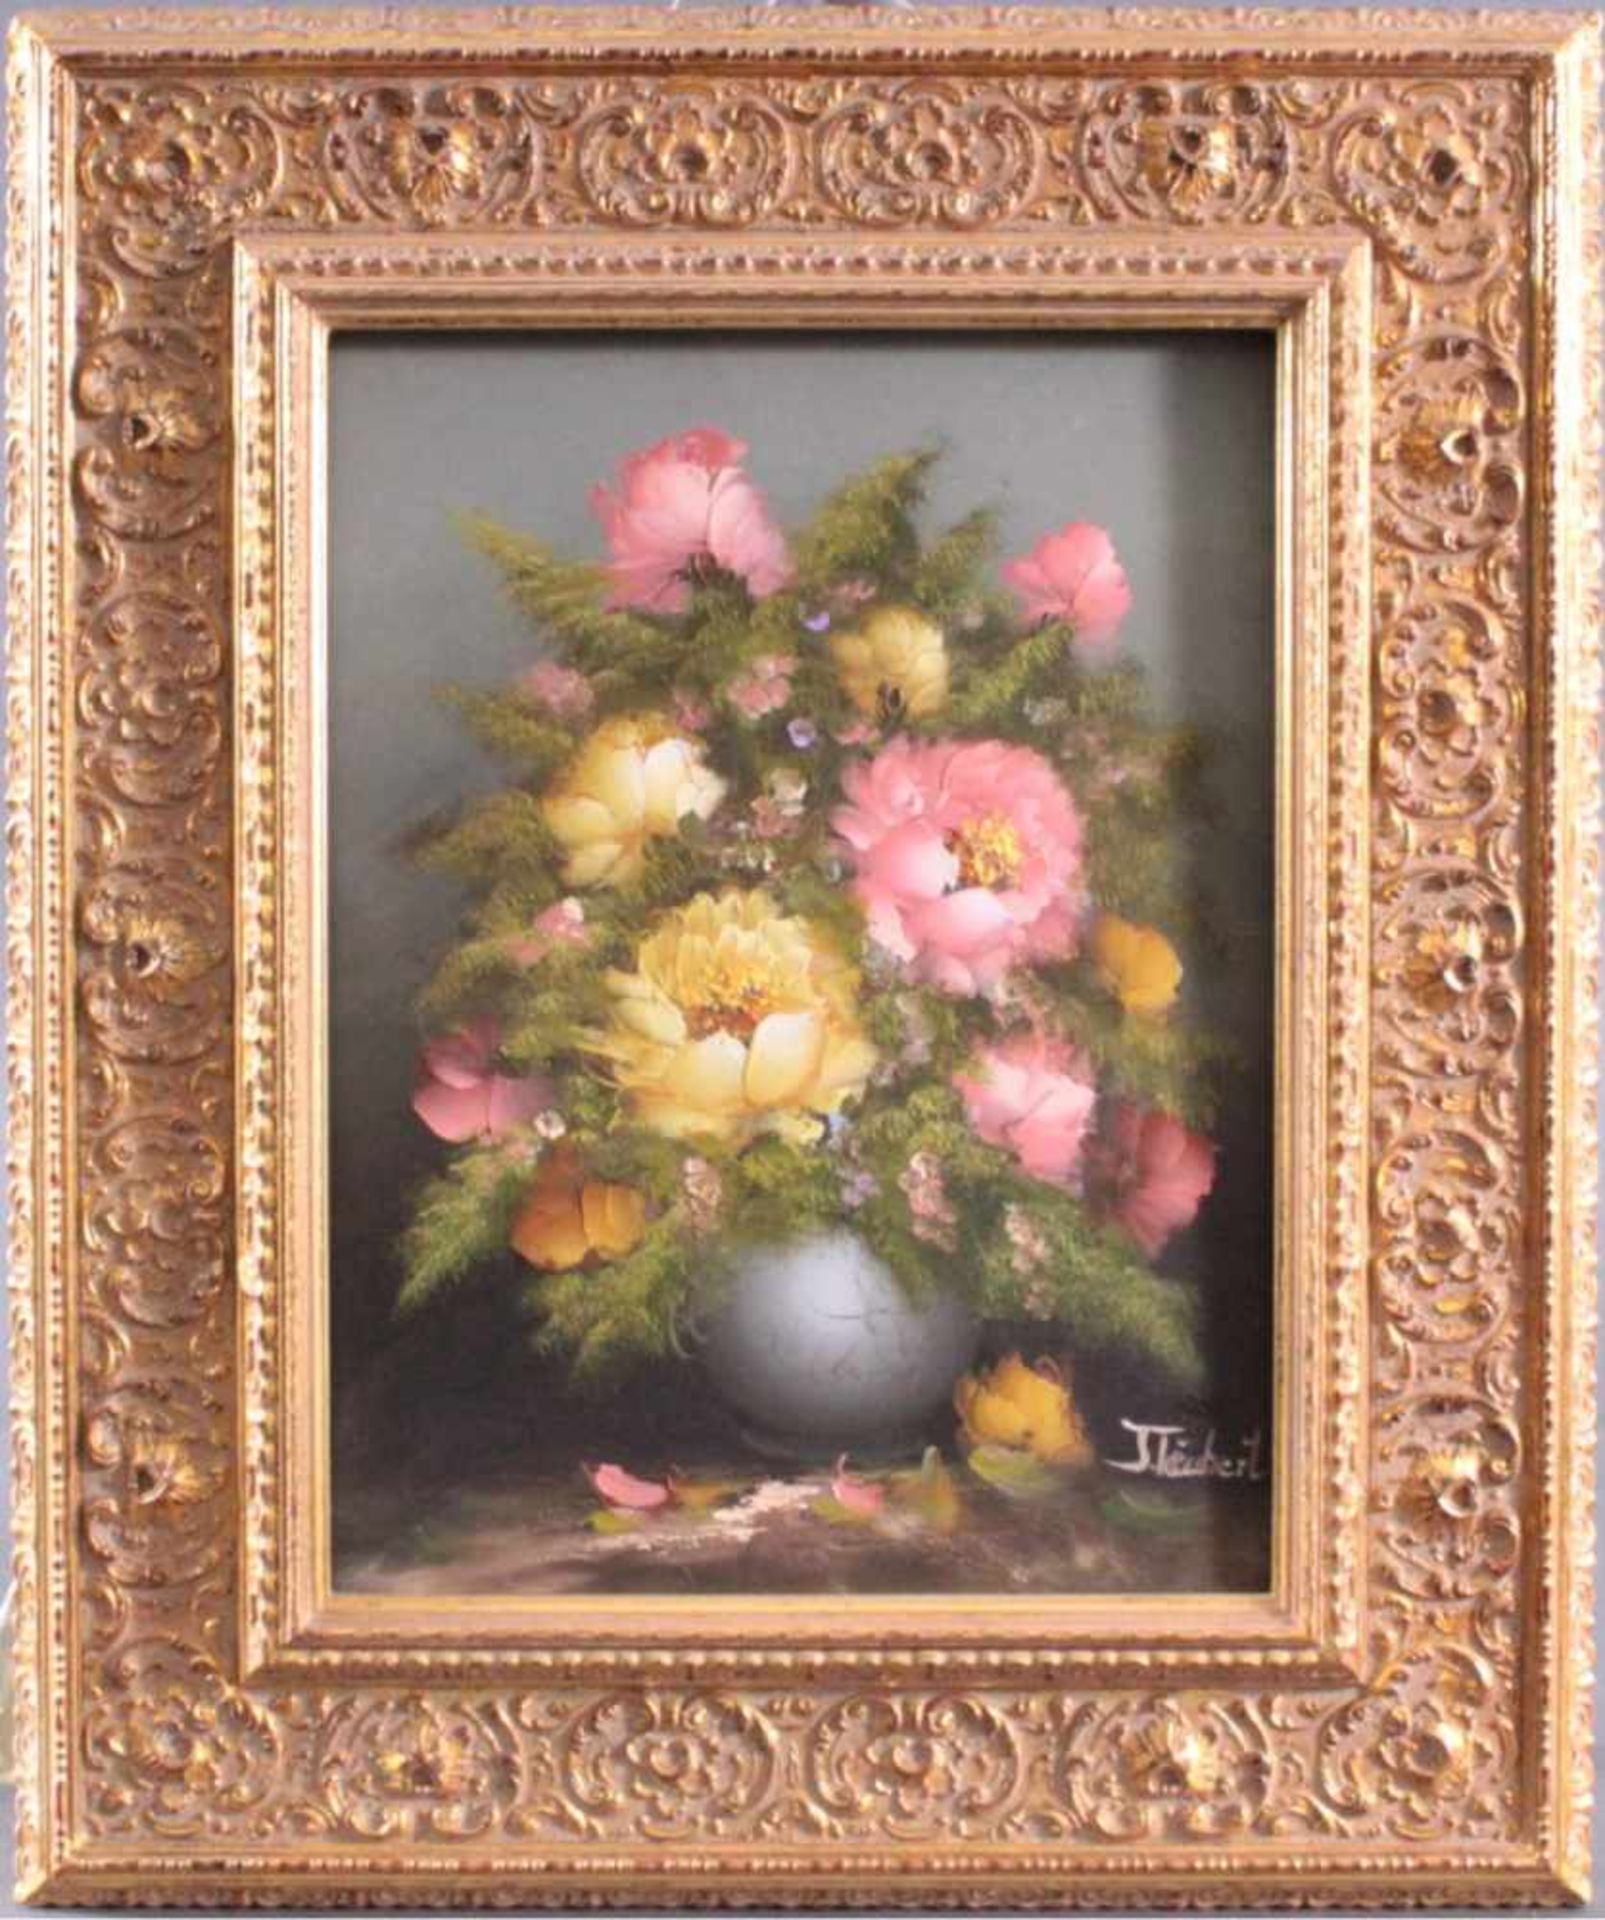 J. Täubert (1956)"Blumen in Vase". Öl/Leinwand, rechts unten signiert, ca. 30x 40 cm. Gerahmt